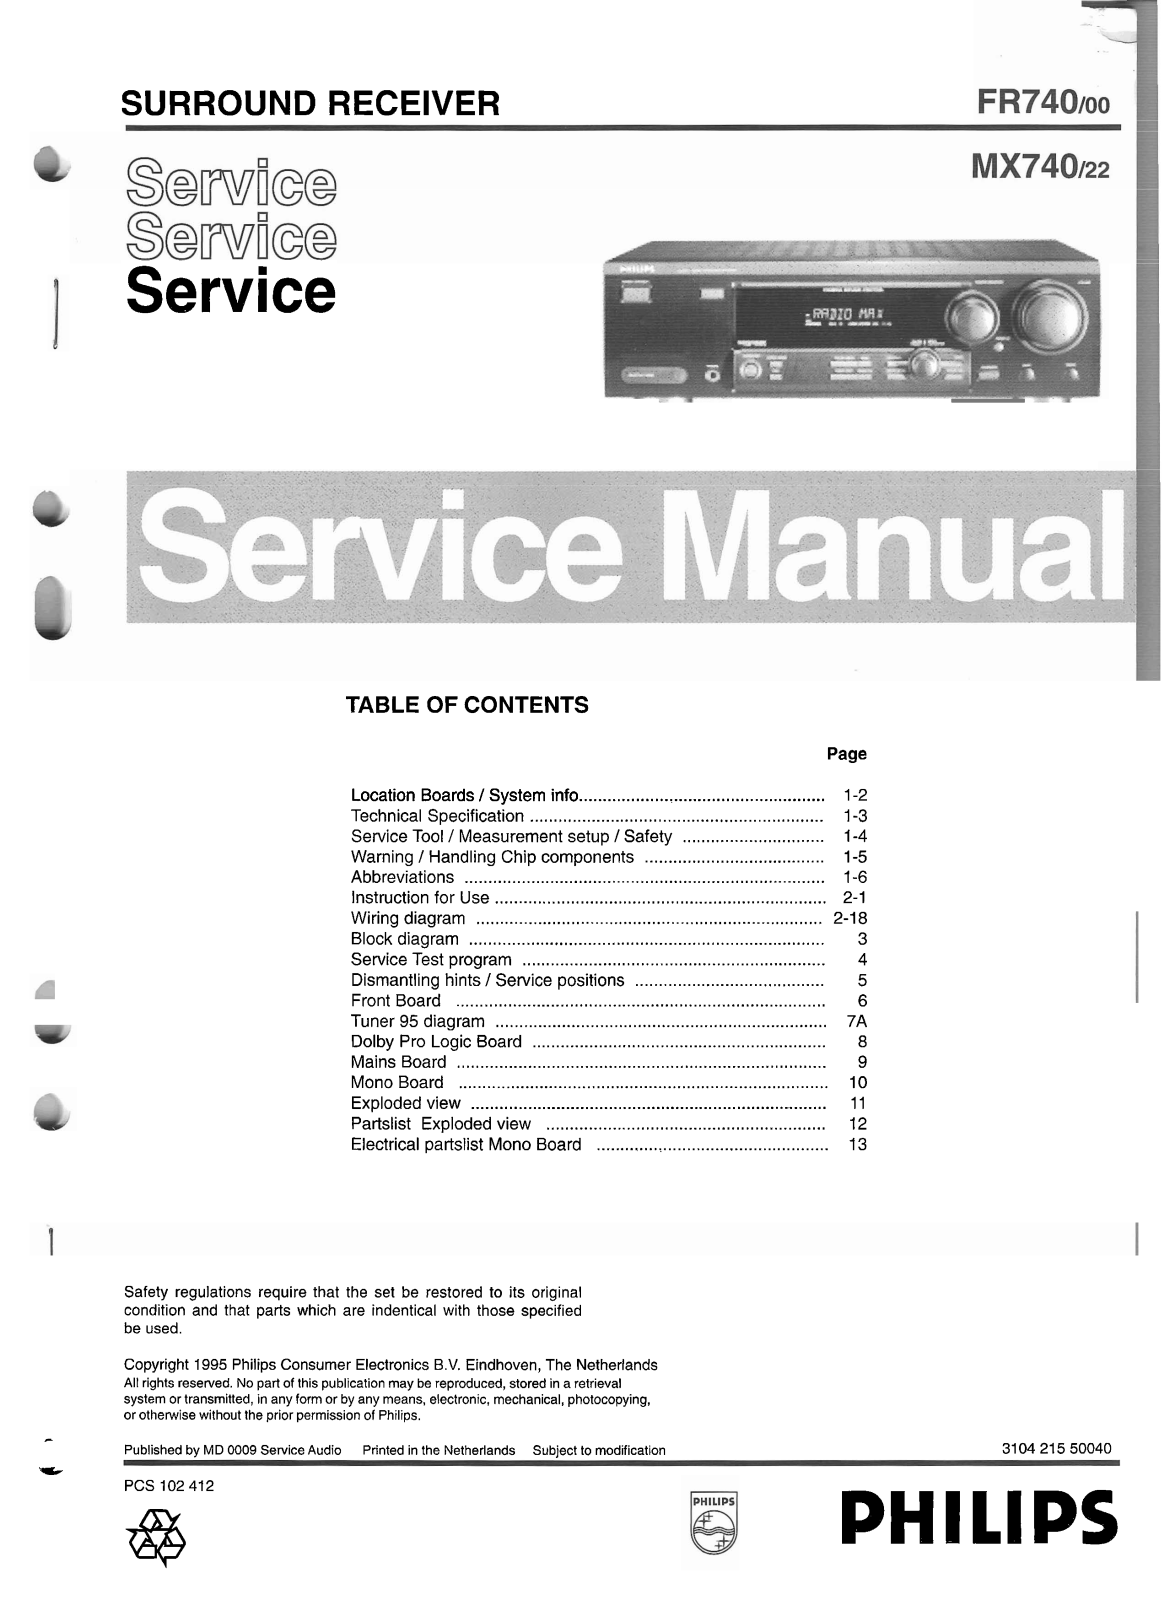 Philips FR-740, MX-740 Service Manual